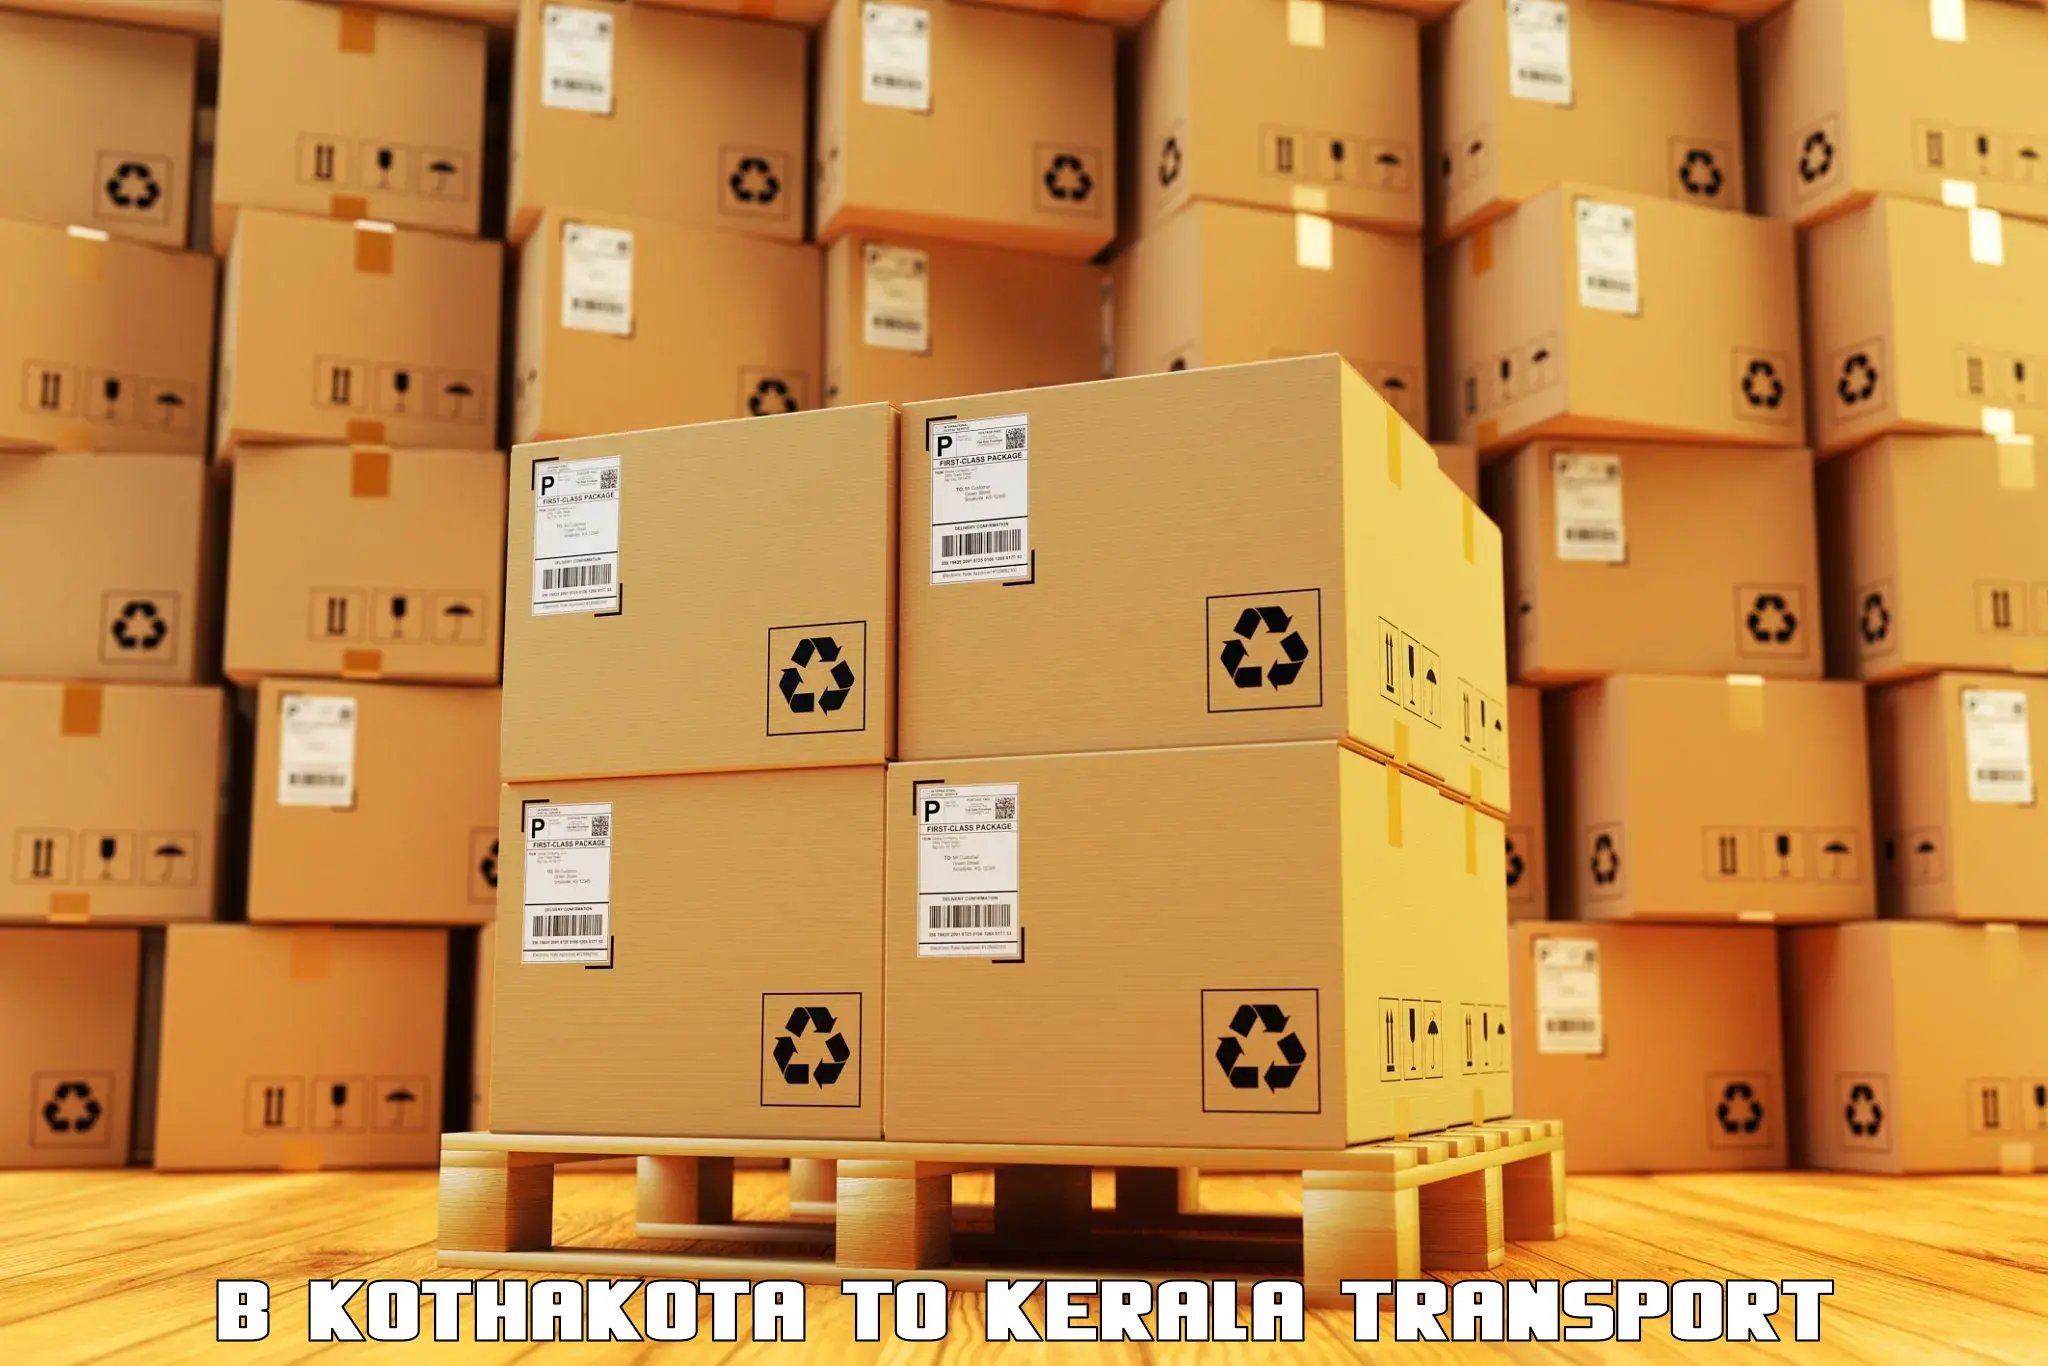 Nearest transport service B Kothakota to Kakkayam